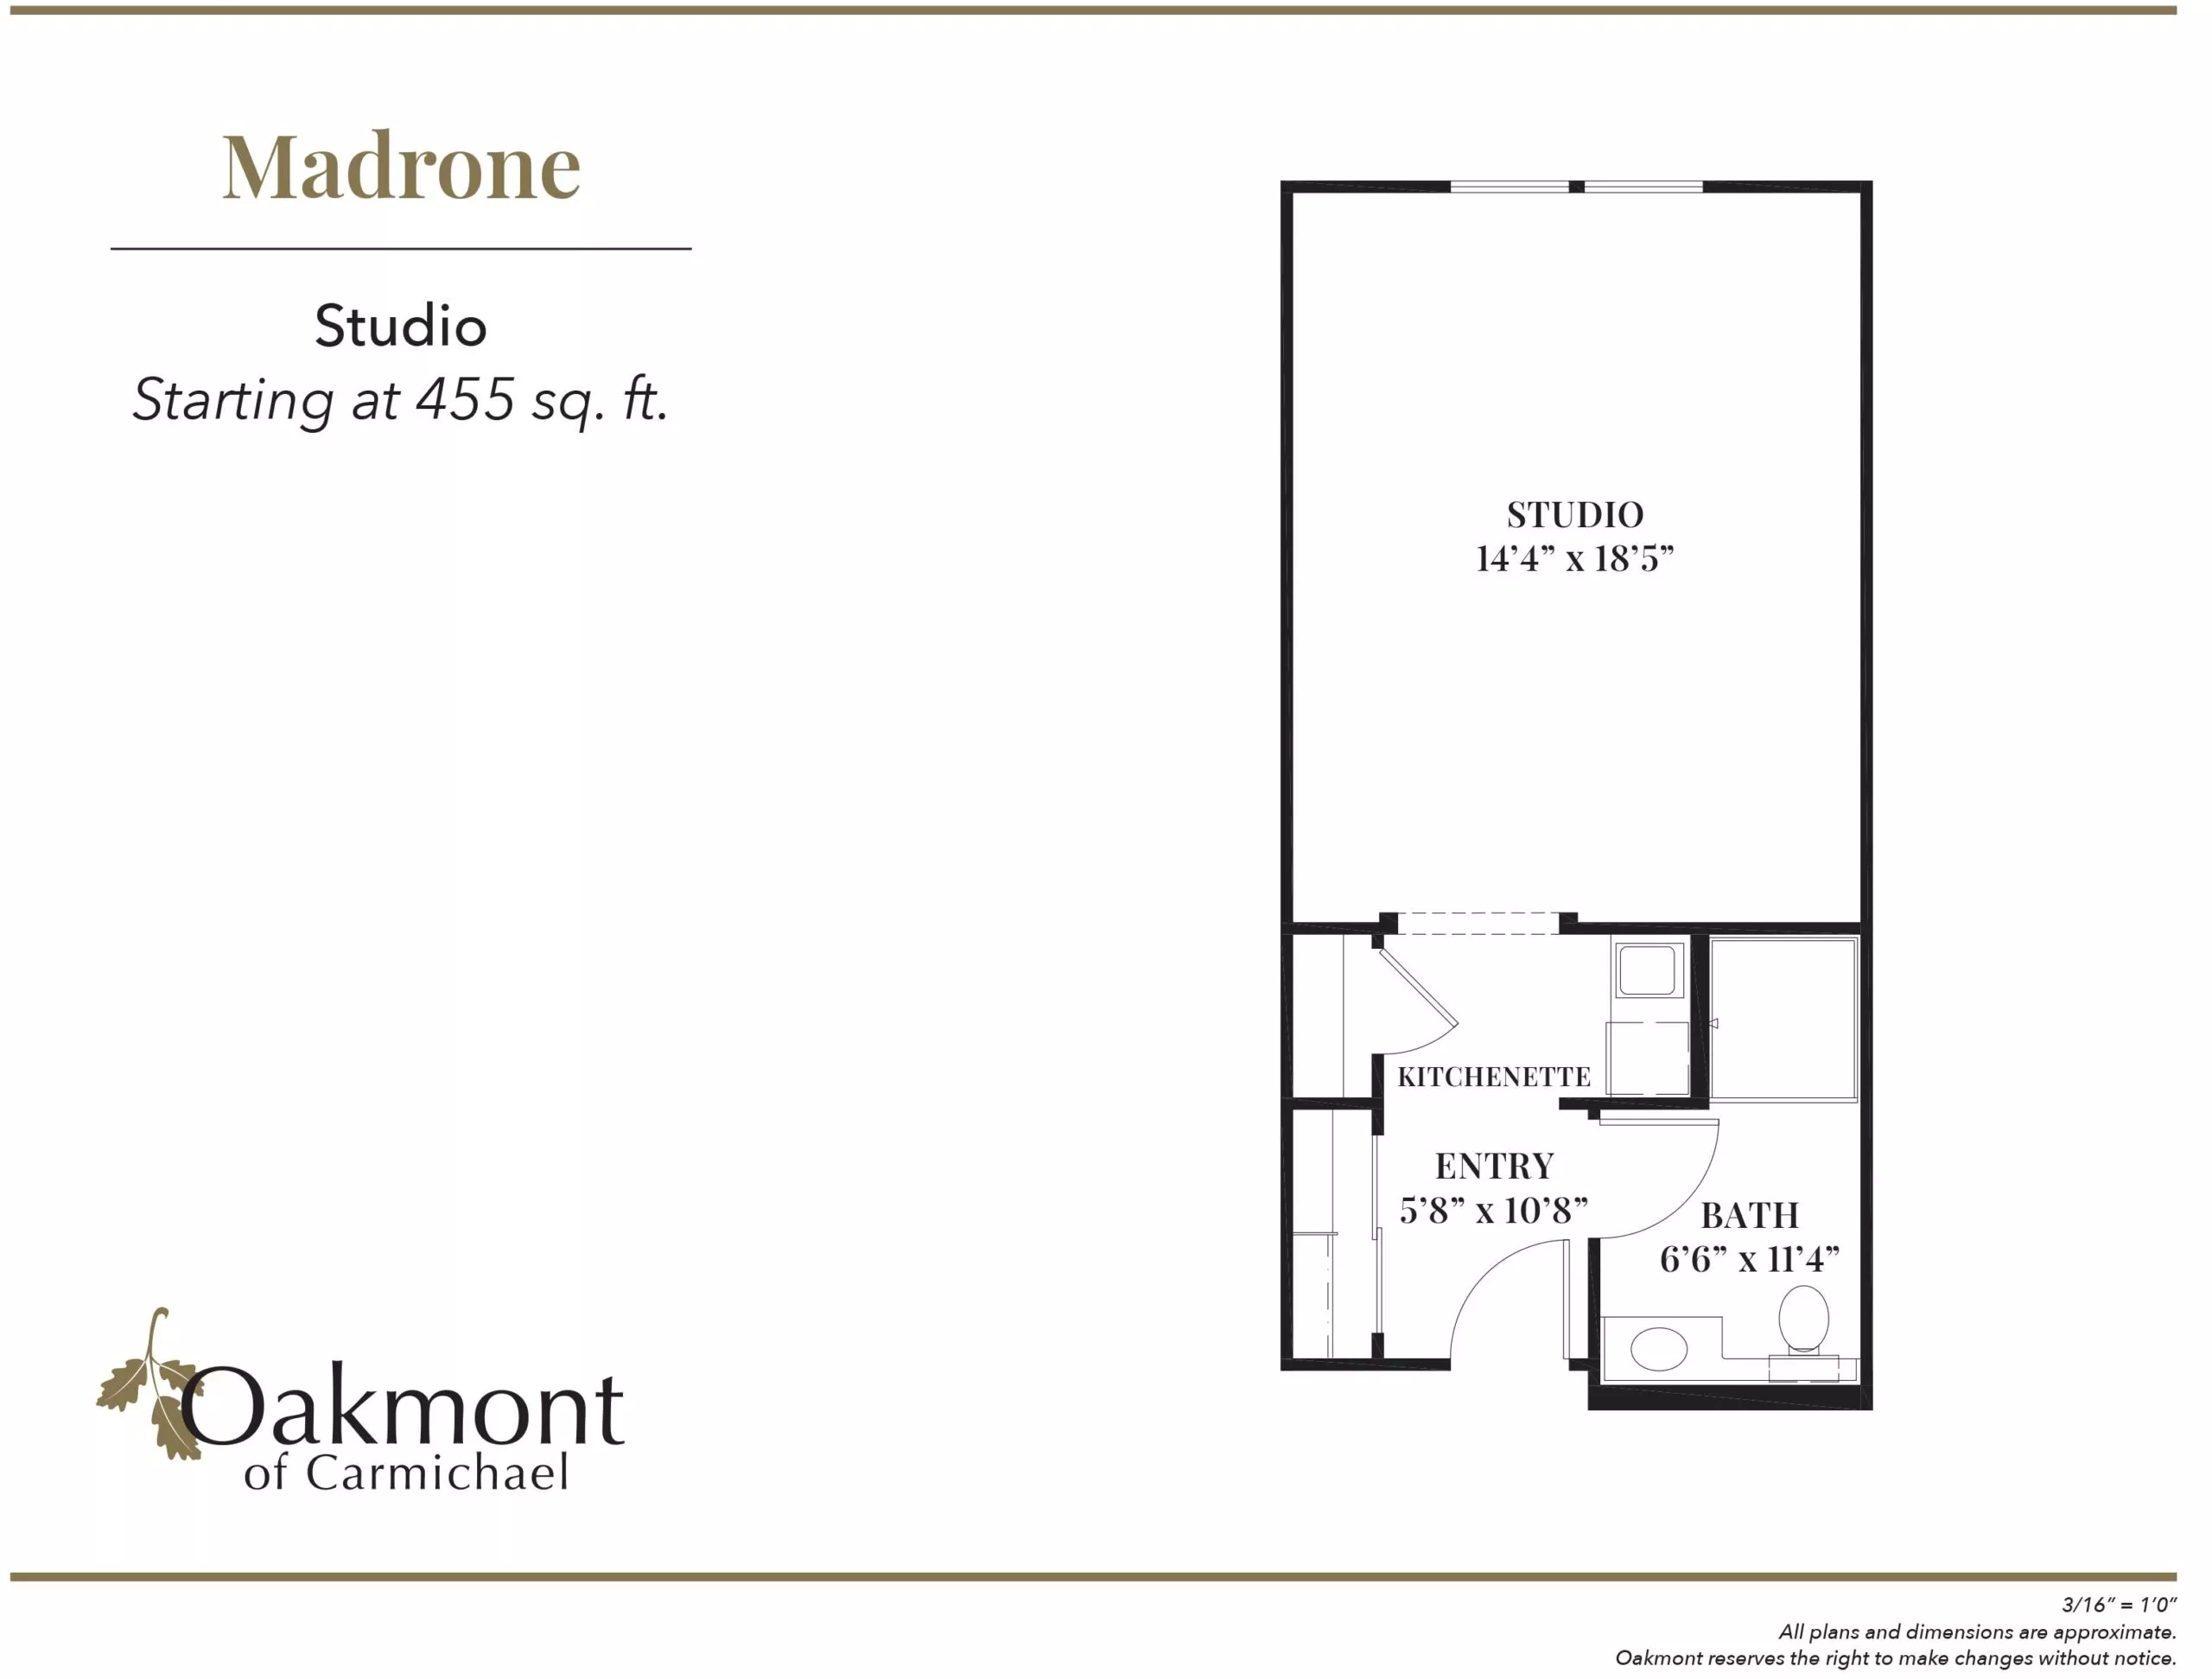 Madrone Studio floor plan